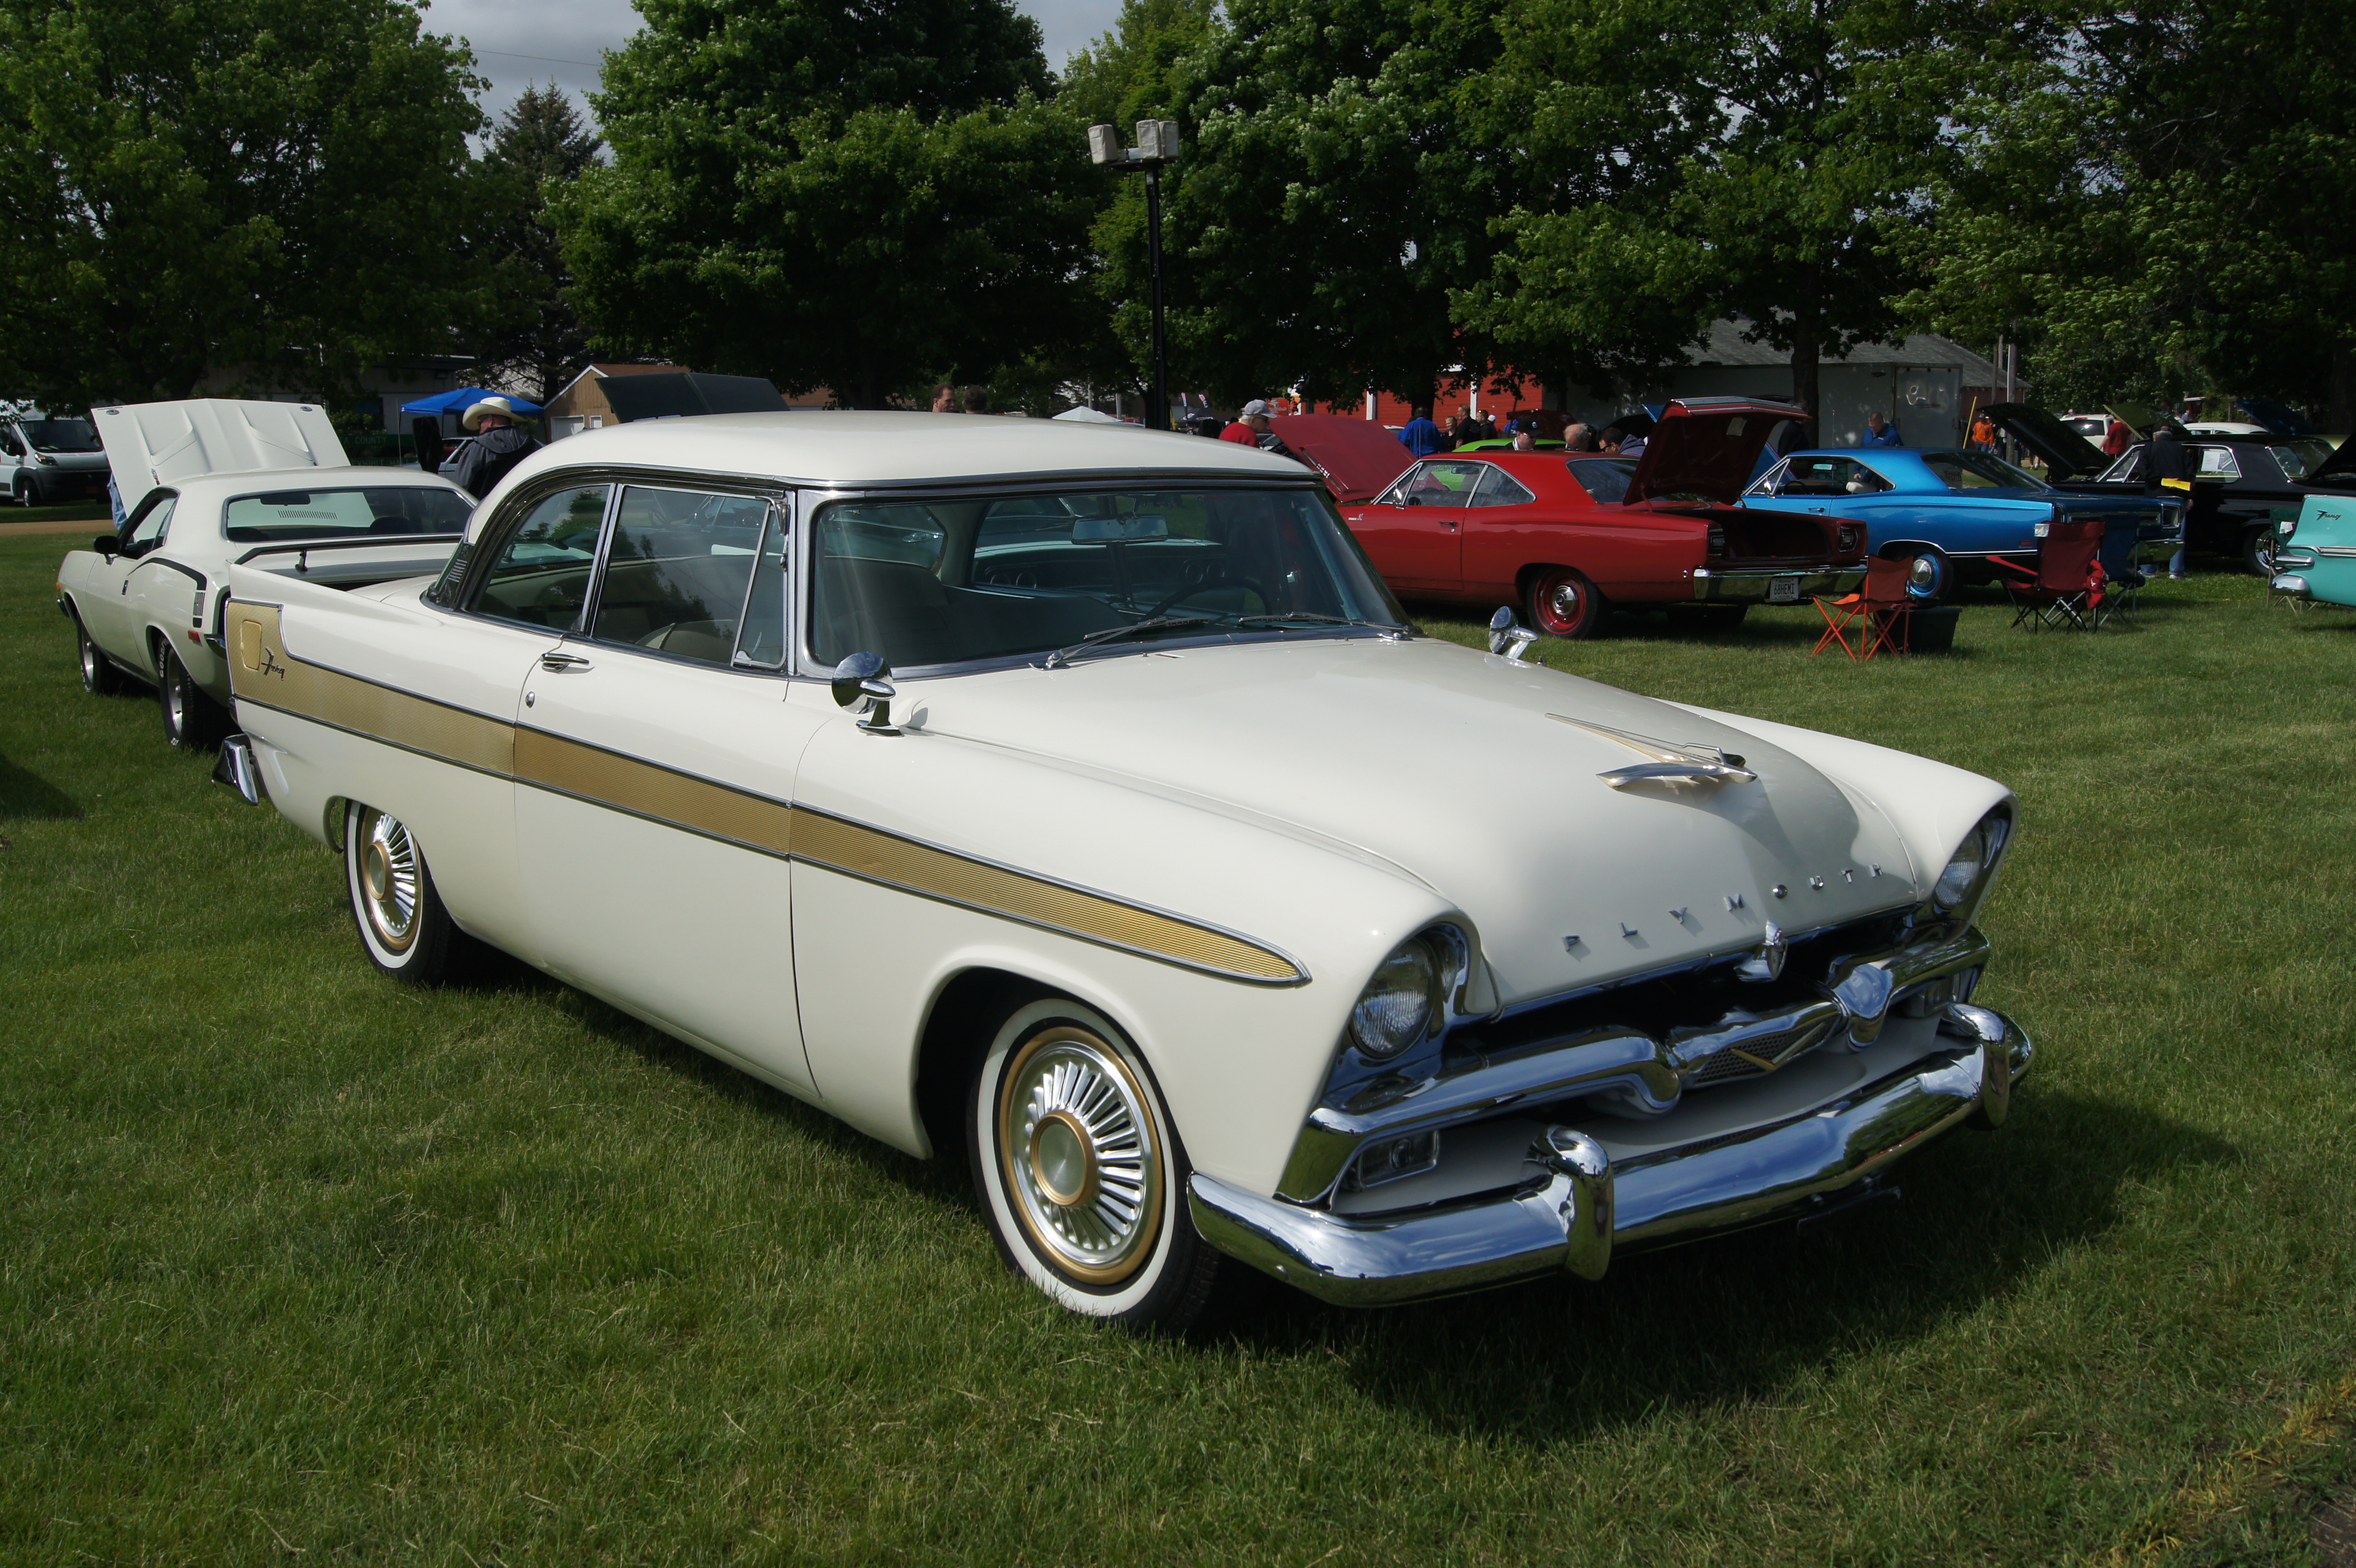  A white 1956 Chrysler Plymouth Fury